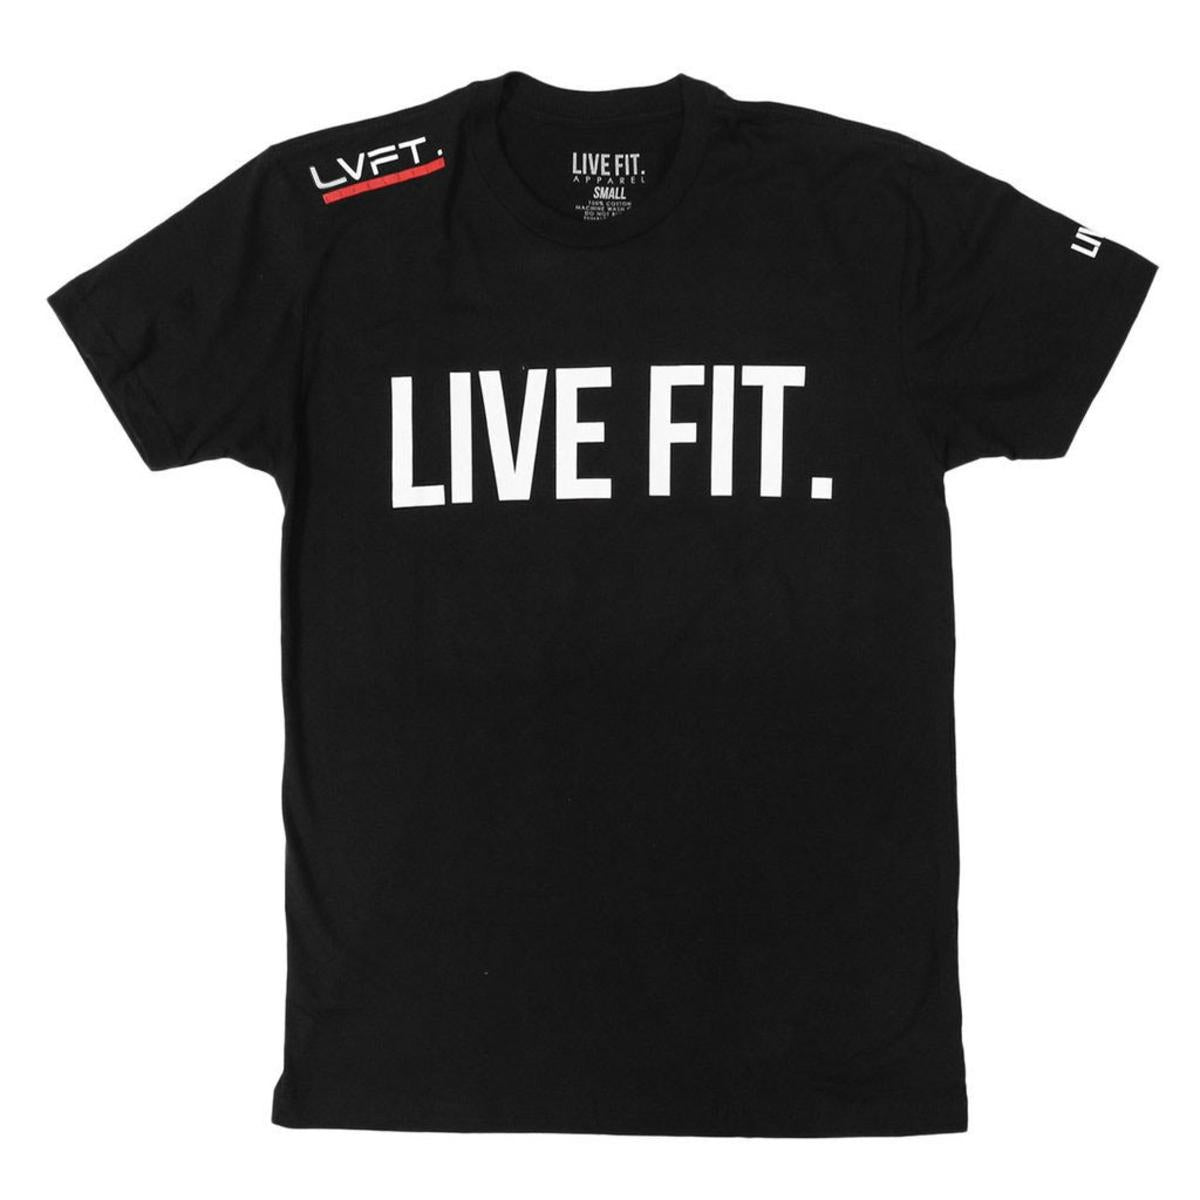 LIVE FIT. - A T H L E T I C ⚡️ G O O D S Shop online now at:  www.livefitapparel.com #livefitapparel #livefit #teamlvft #lvft